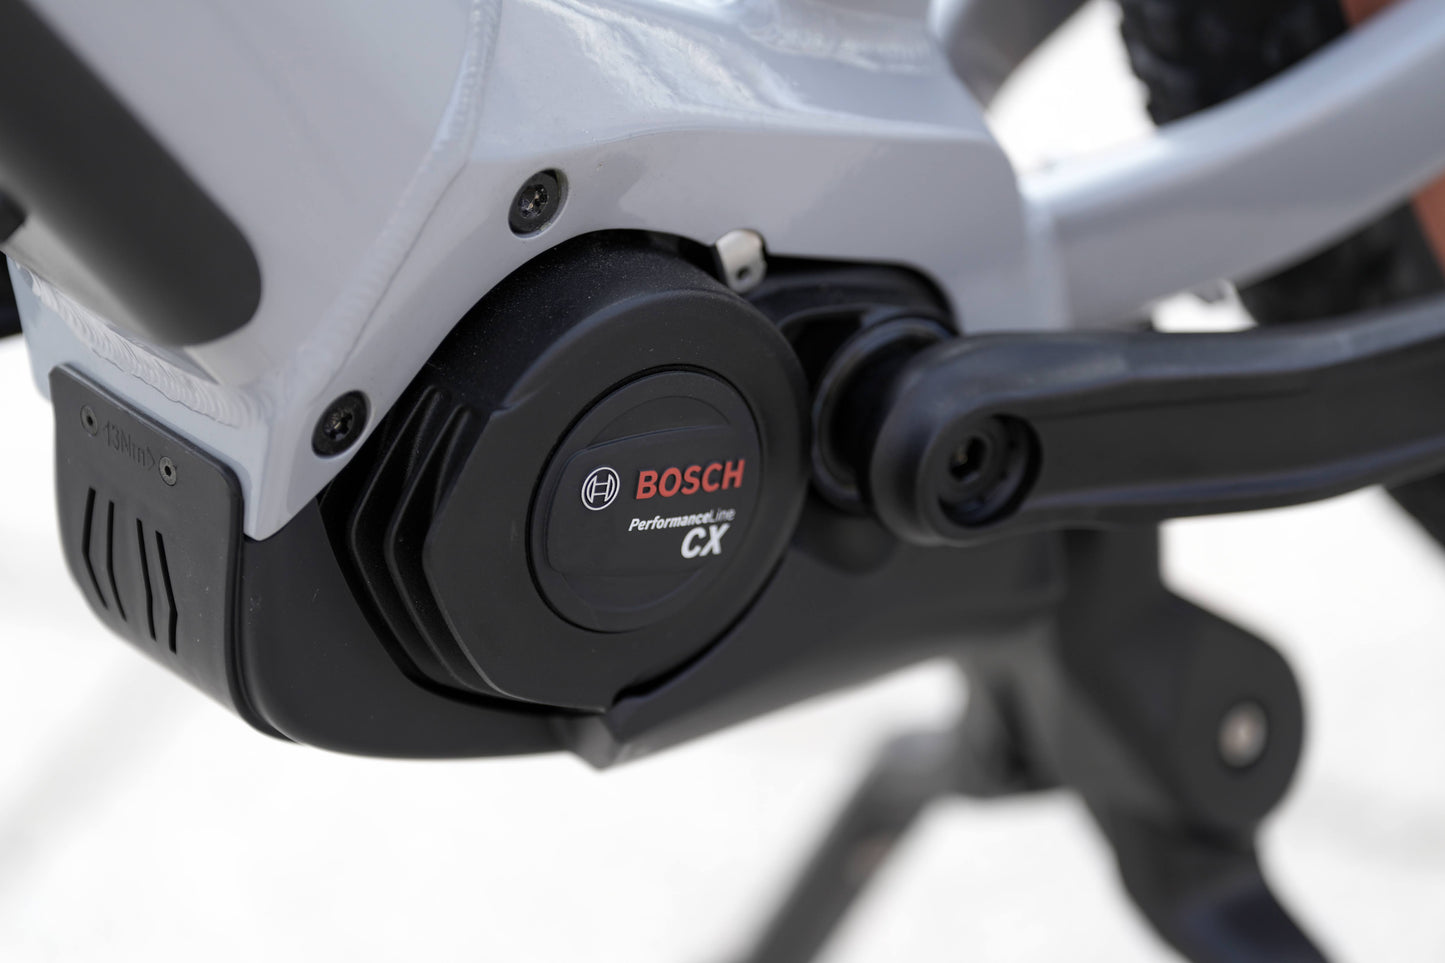 COMING SOON: VIP eDirtySixer Bosch - 32" or 36" wheels